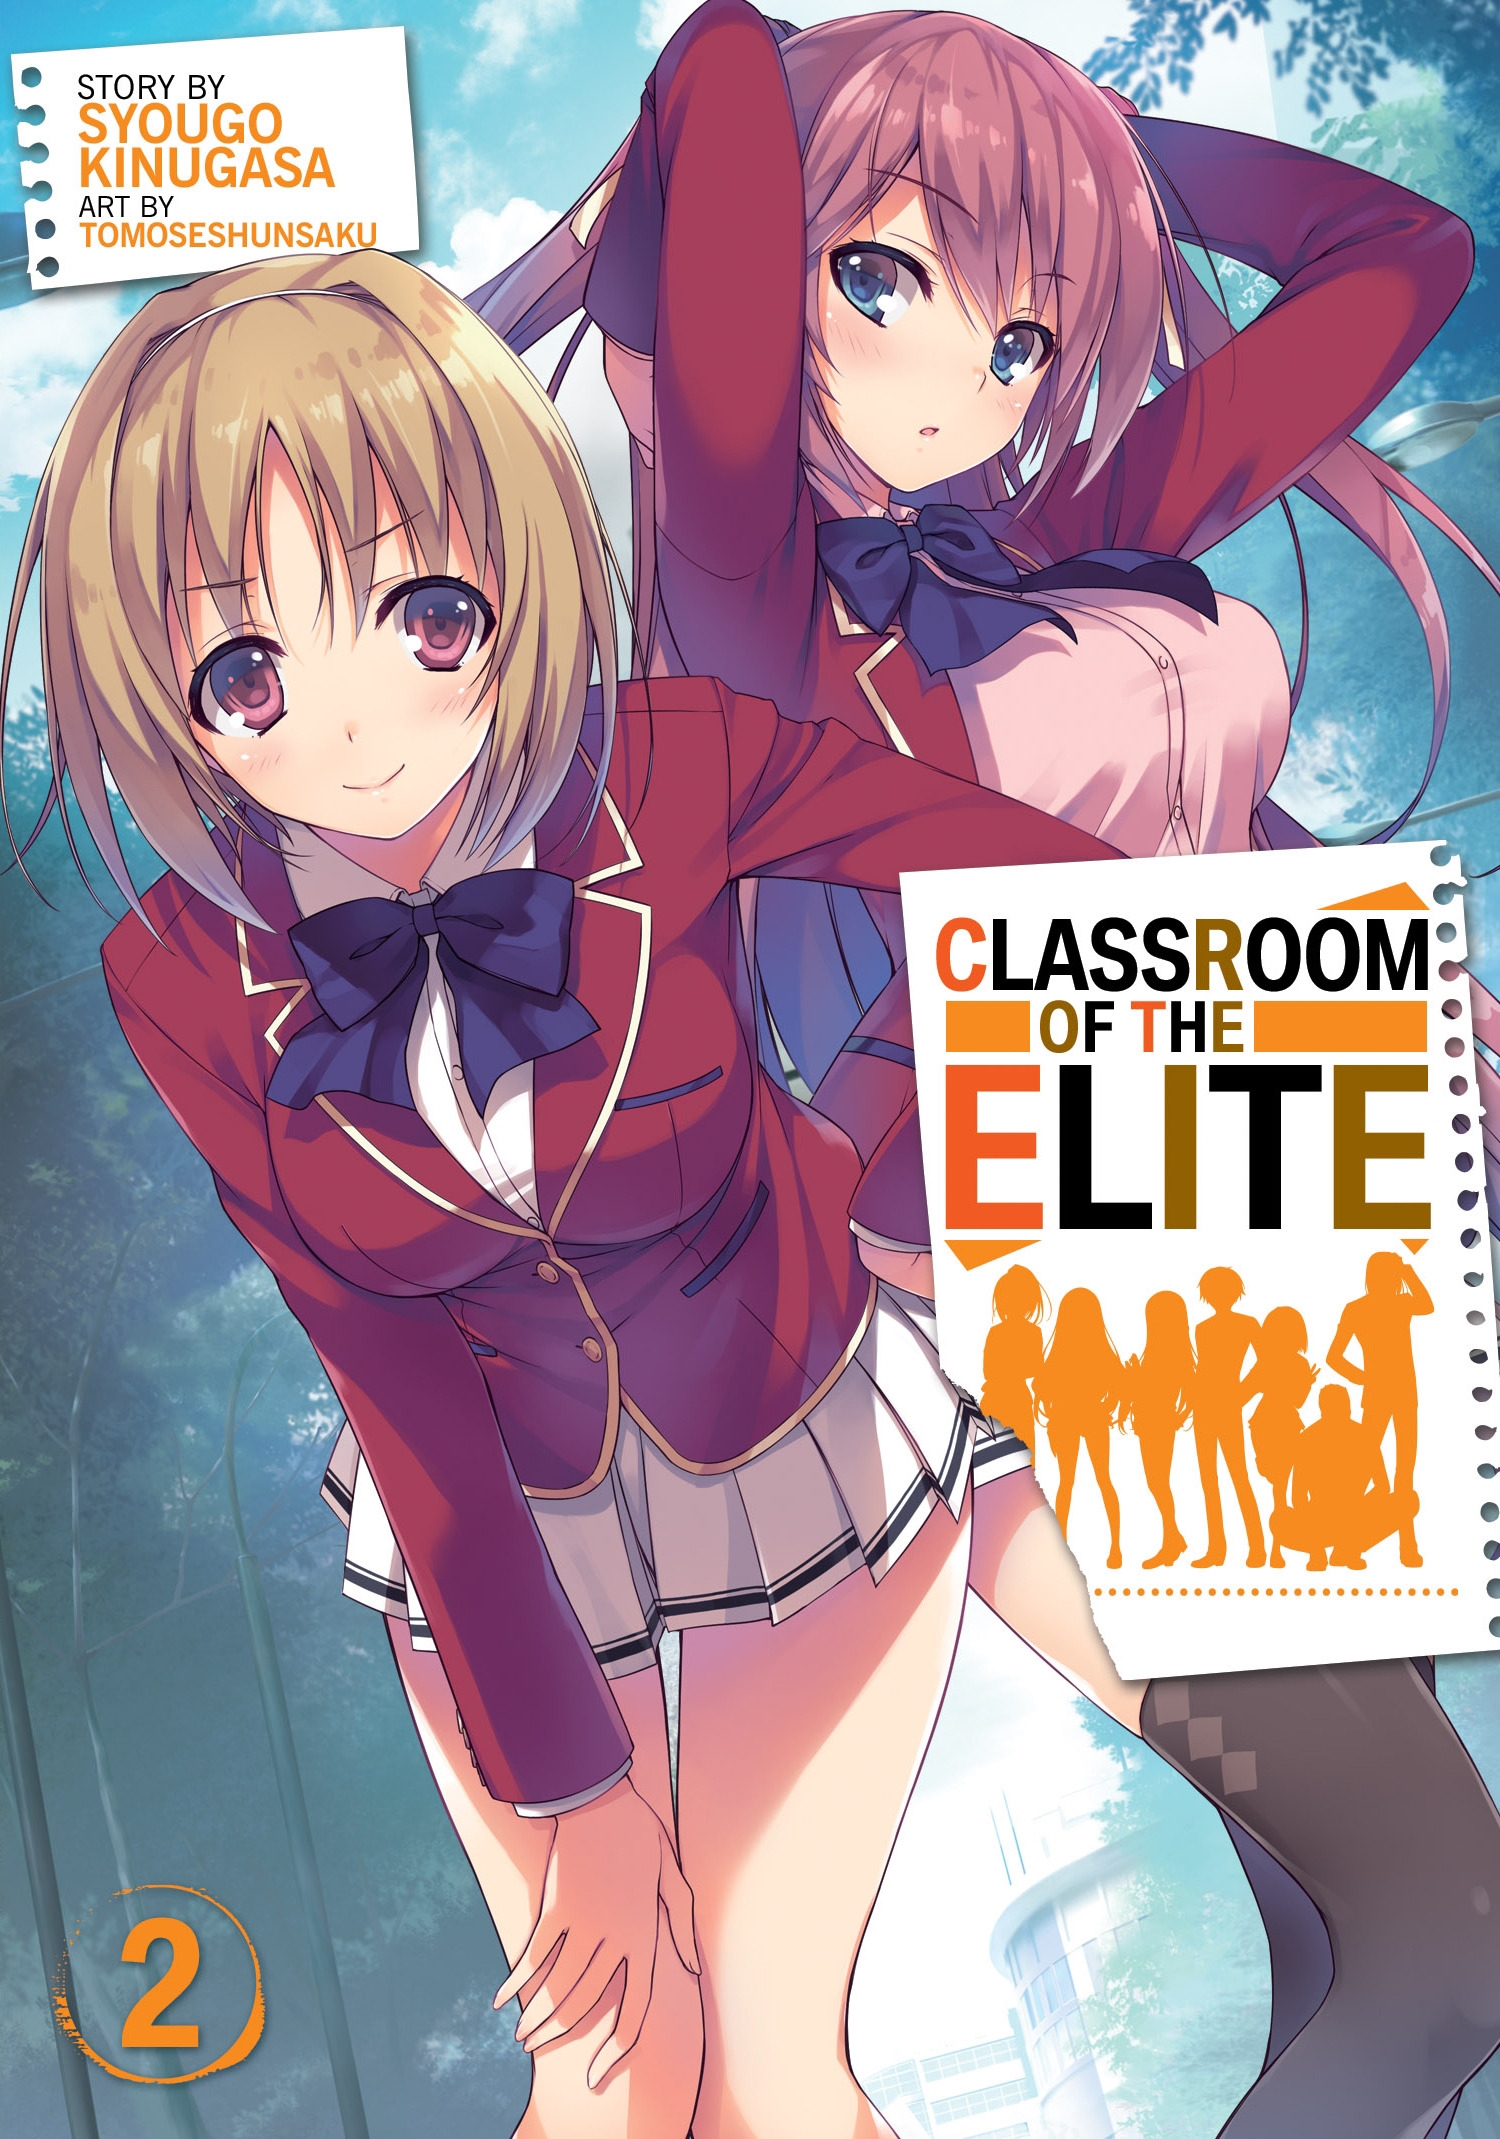 Classroom Of The Elite Light Novel Vol 2 By Syougo Kinugasa Penguin Books Australia